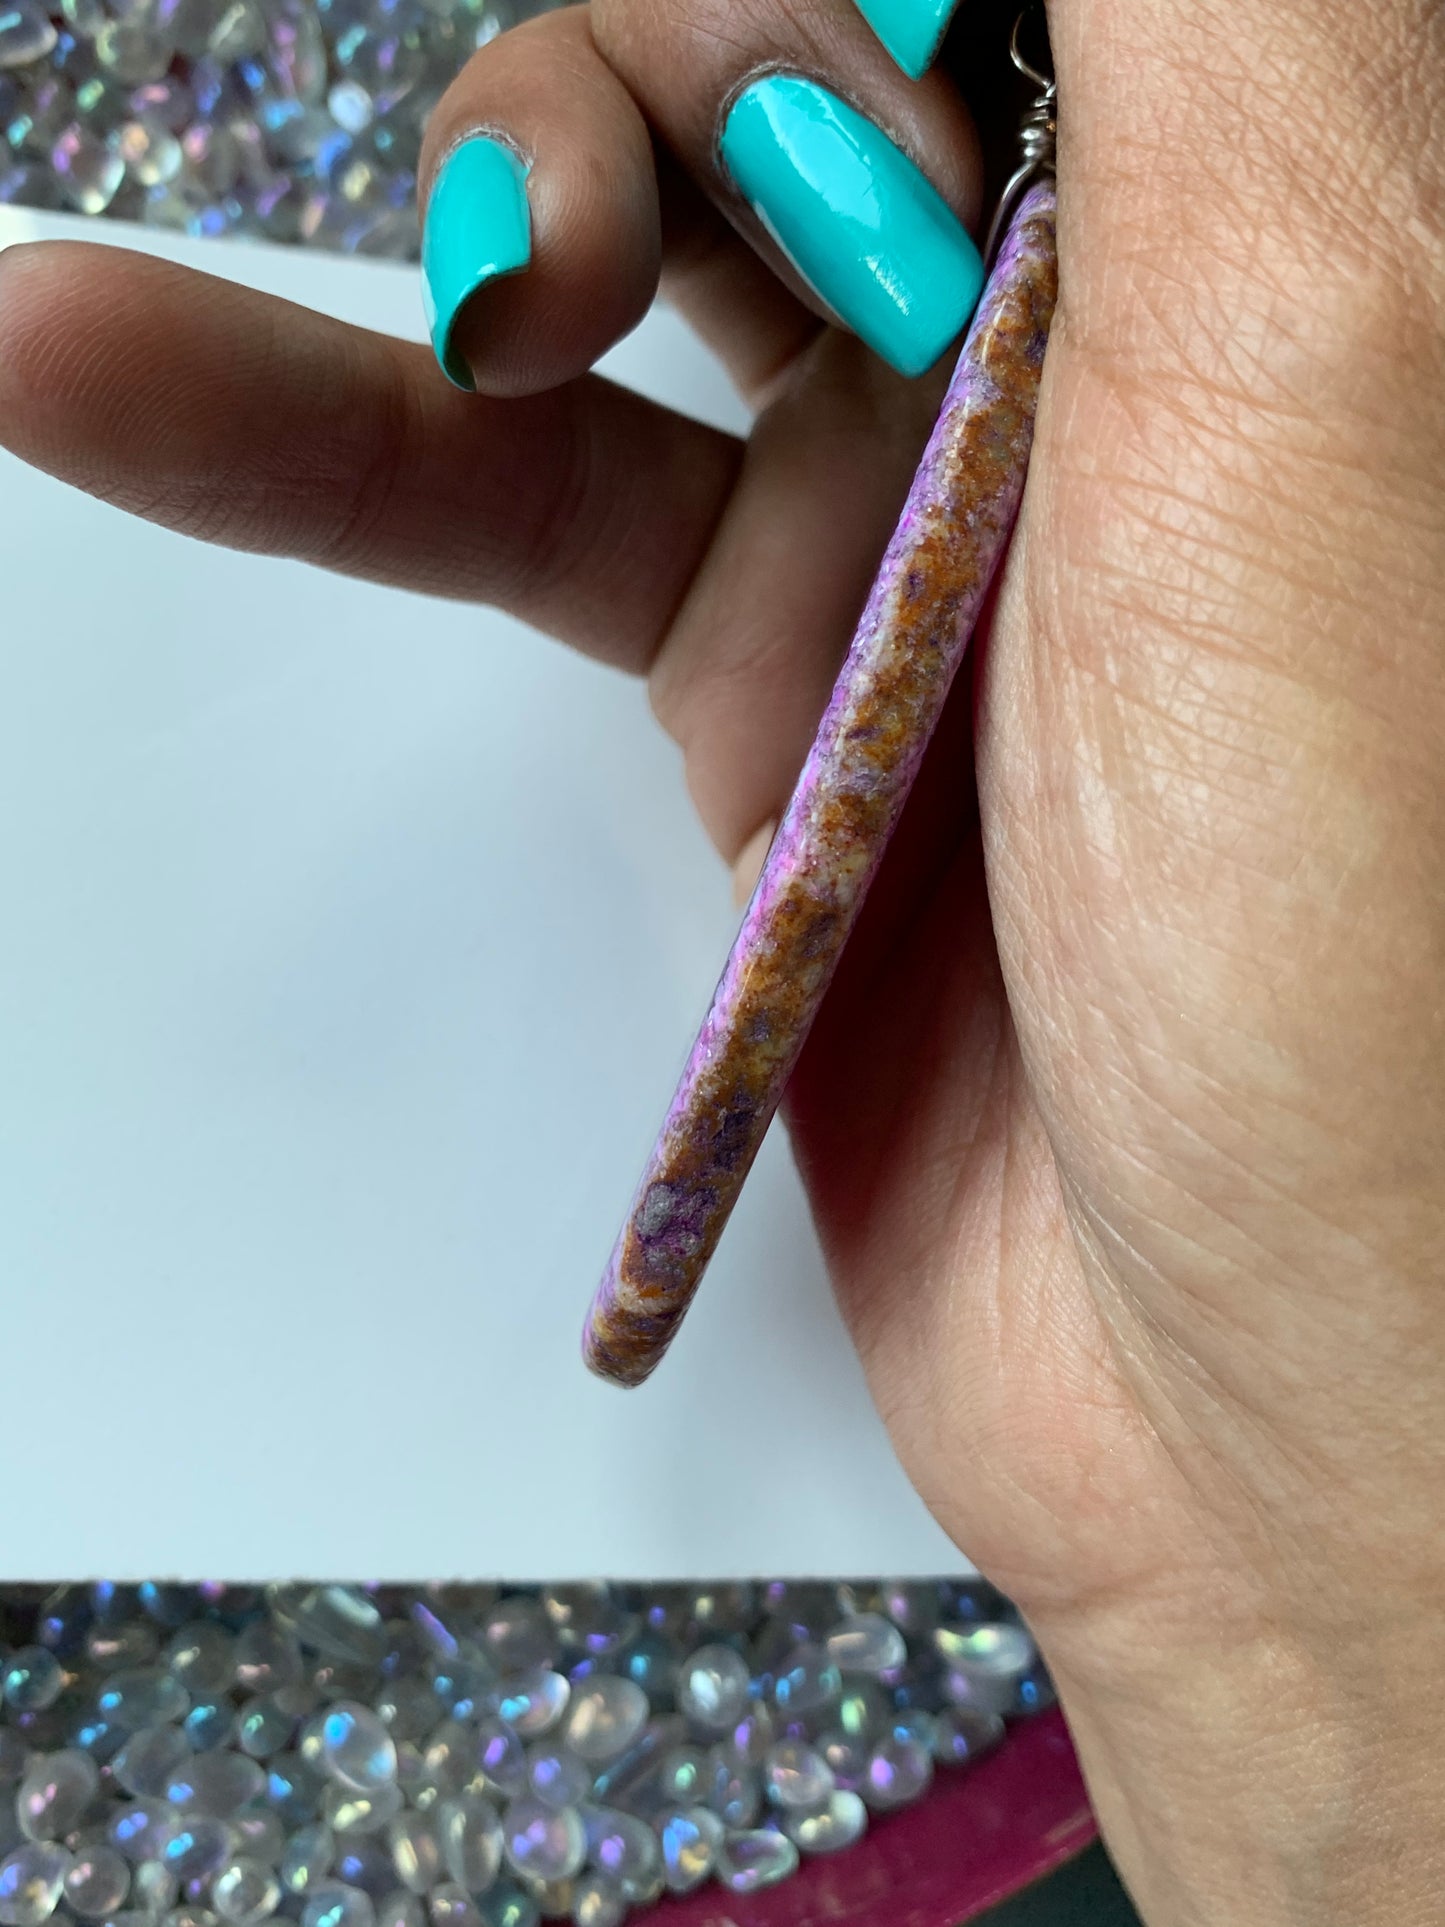 Purple Agate Slice Crystal Gemstone Cord Necklace